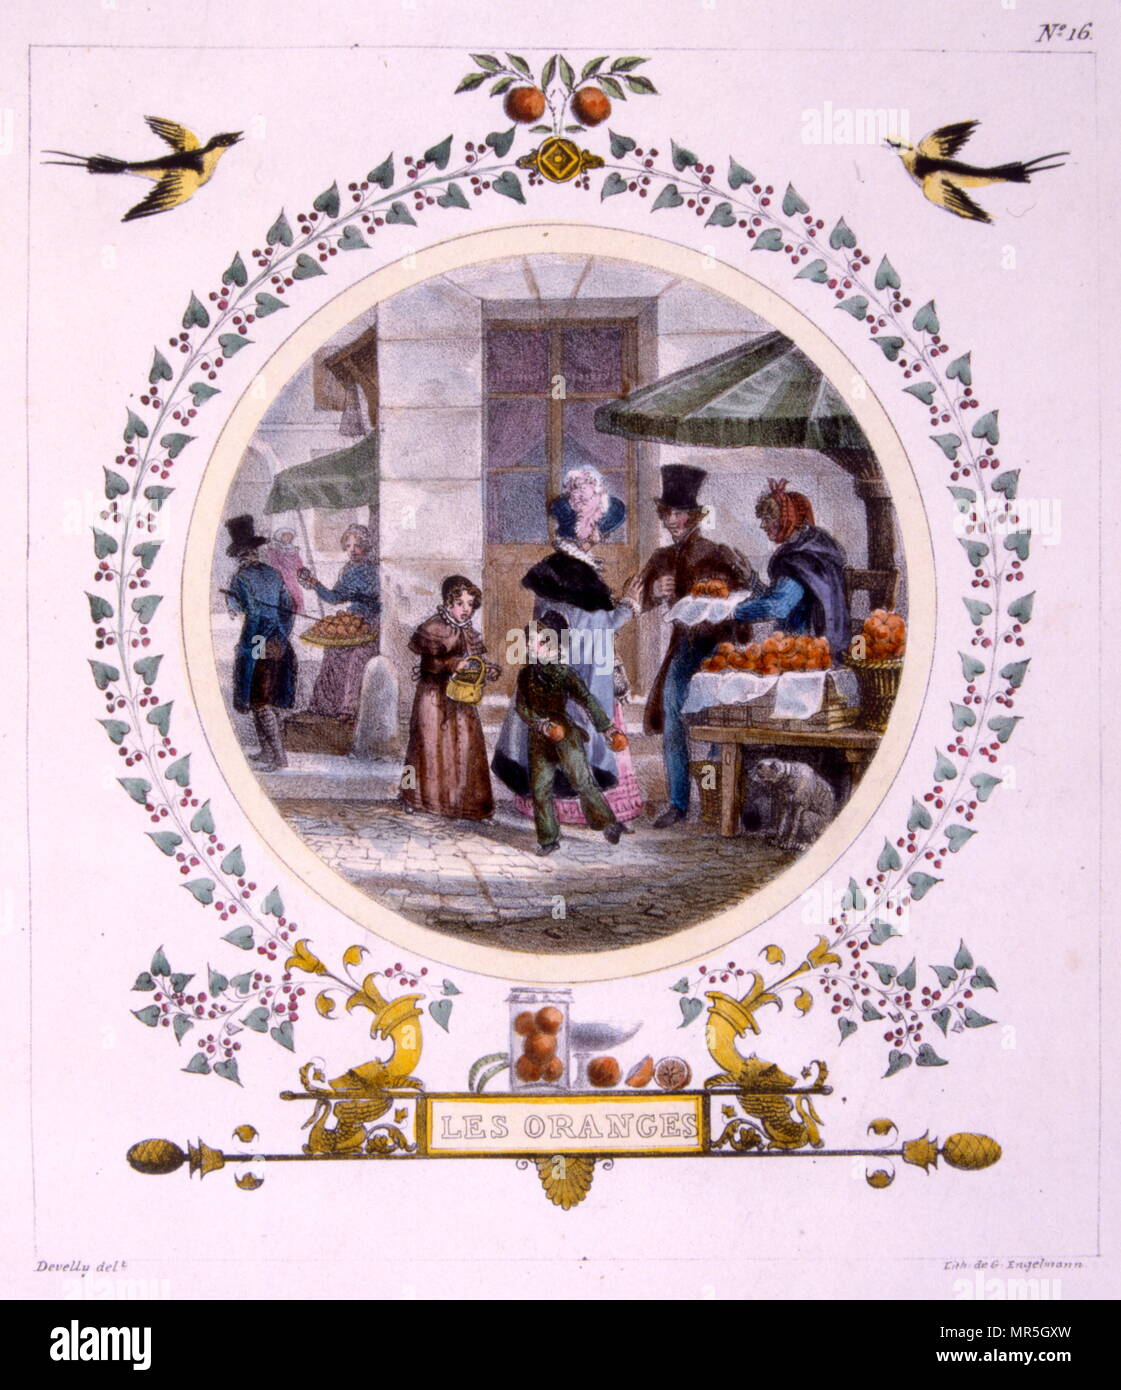 Illustration "oranges" 1828, par Jean-Charles Develly (1783 - 1862), illustrateur et artiste français. Banque D'Images